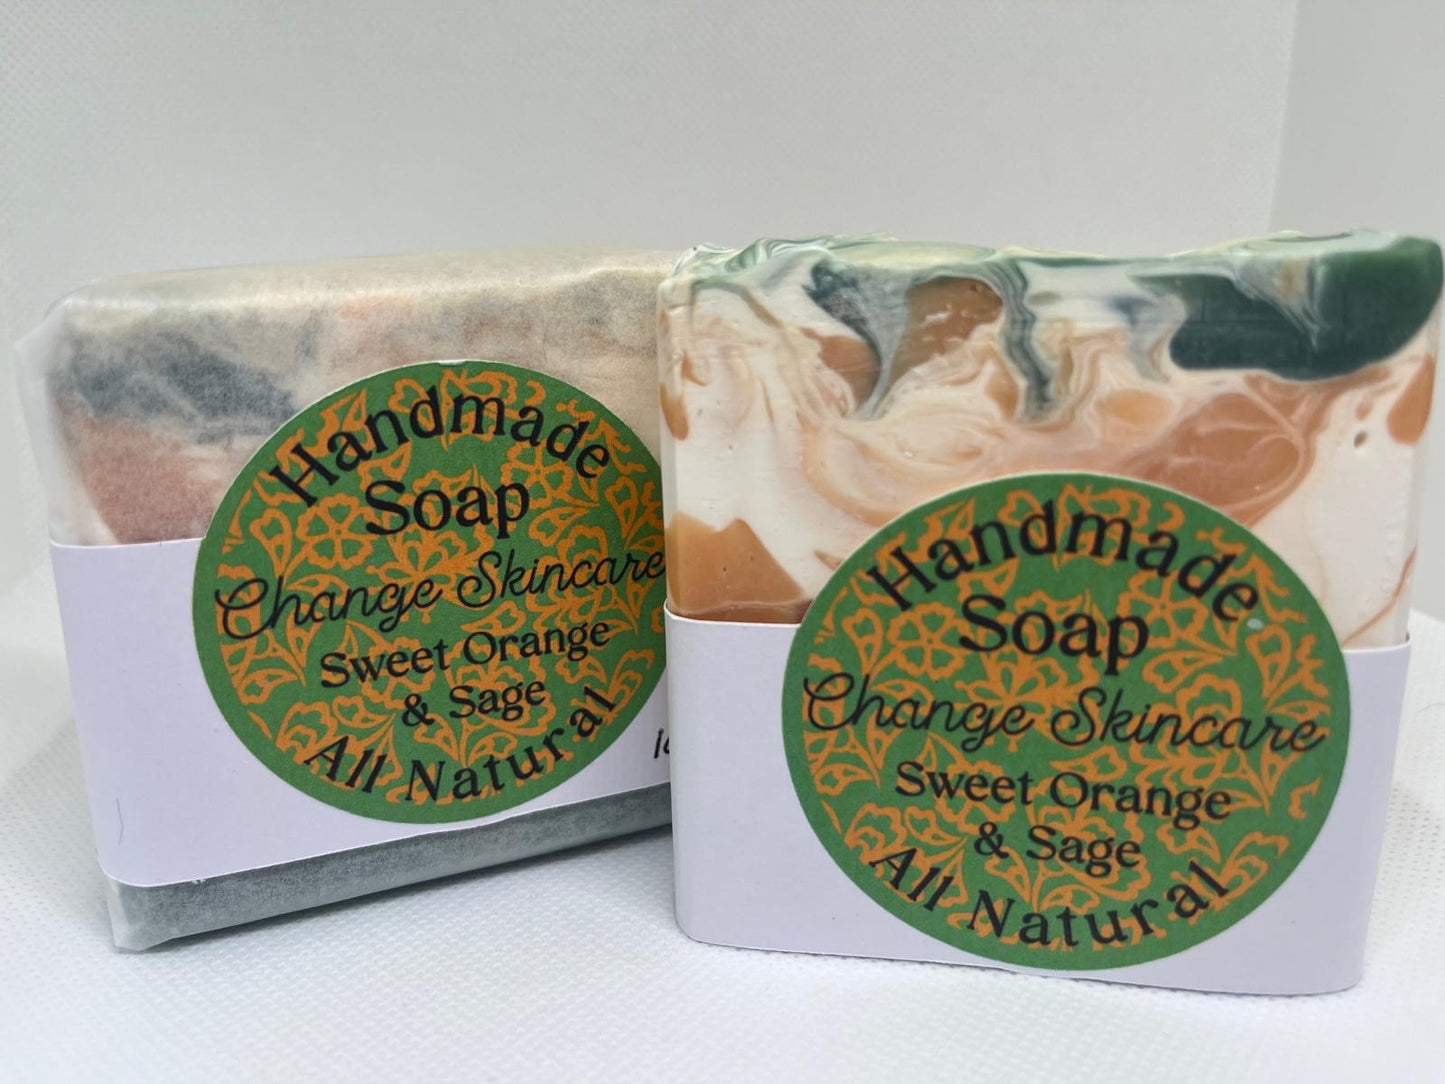 Sweet Orange & Sage Natural Soap Bar